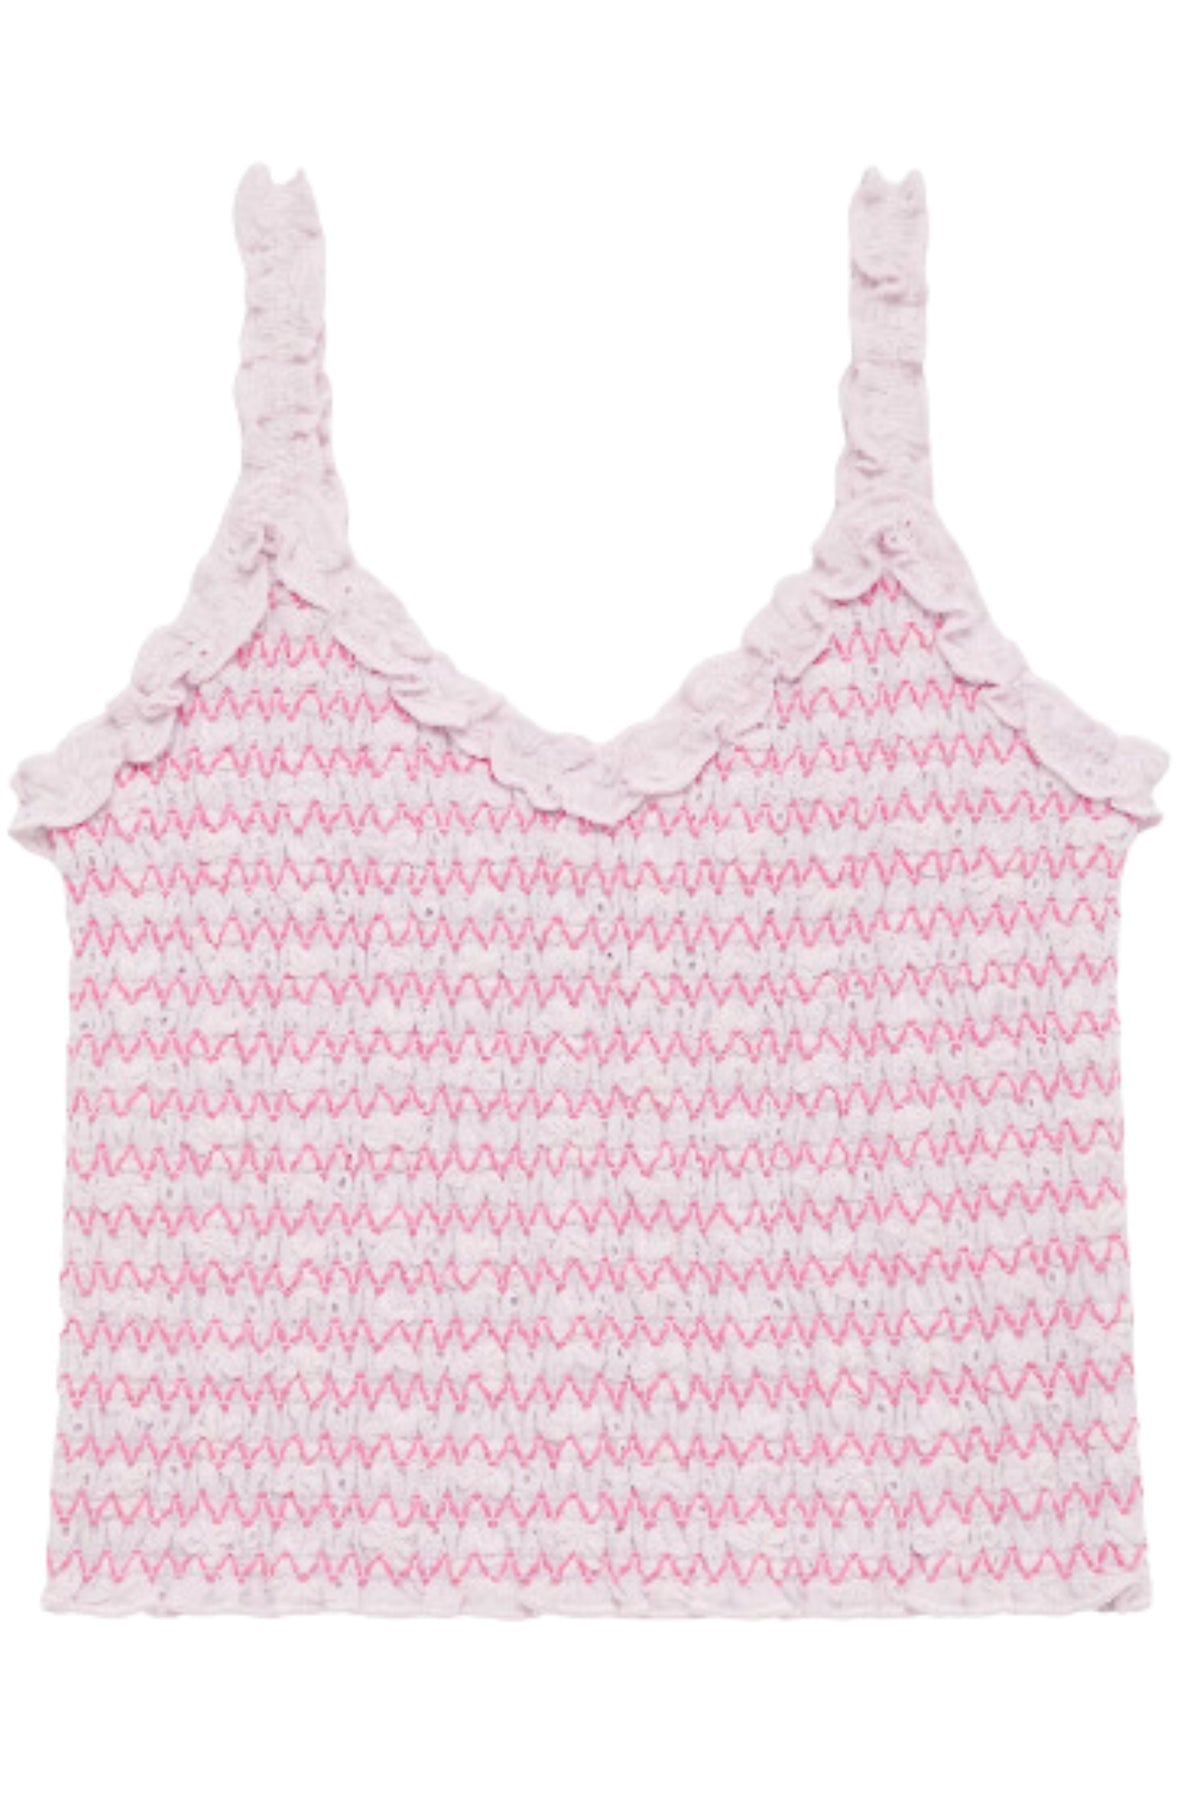 KatieJ NYC - Tween - Baby Pink Shari Embroidered Top